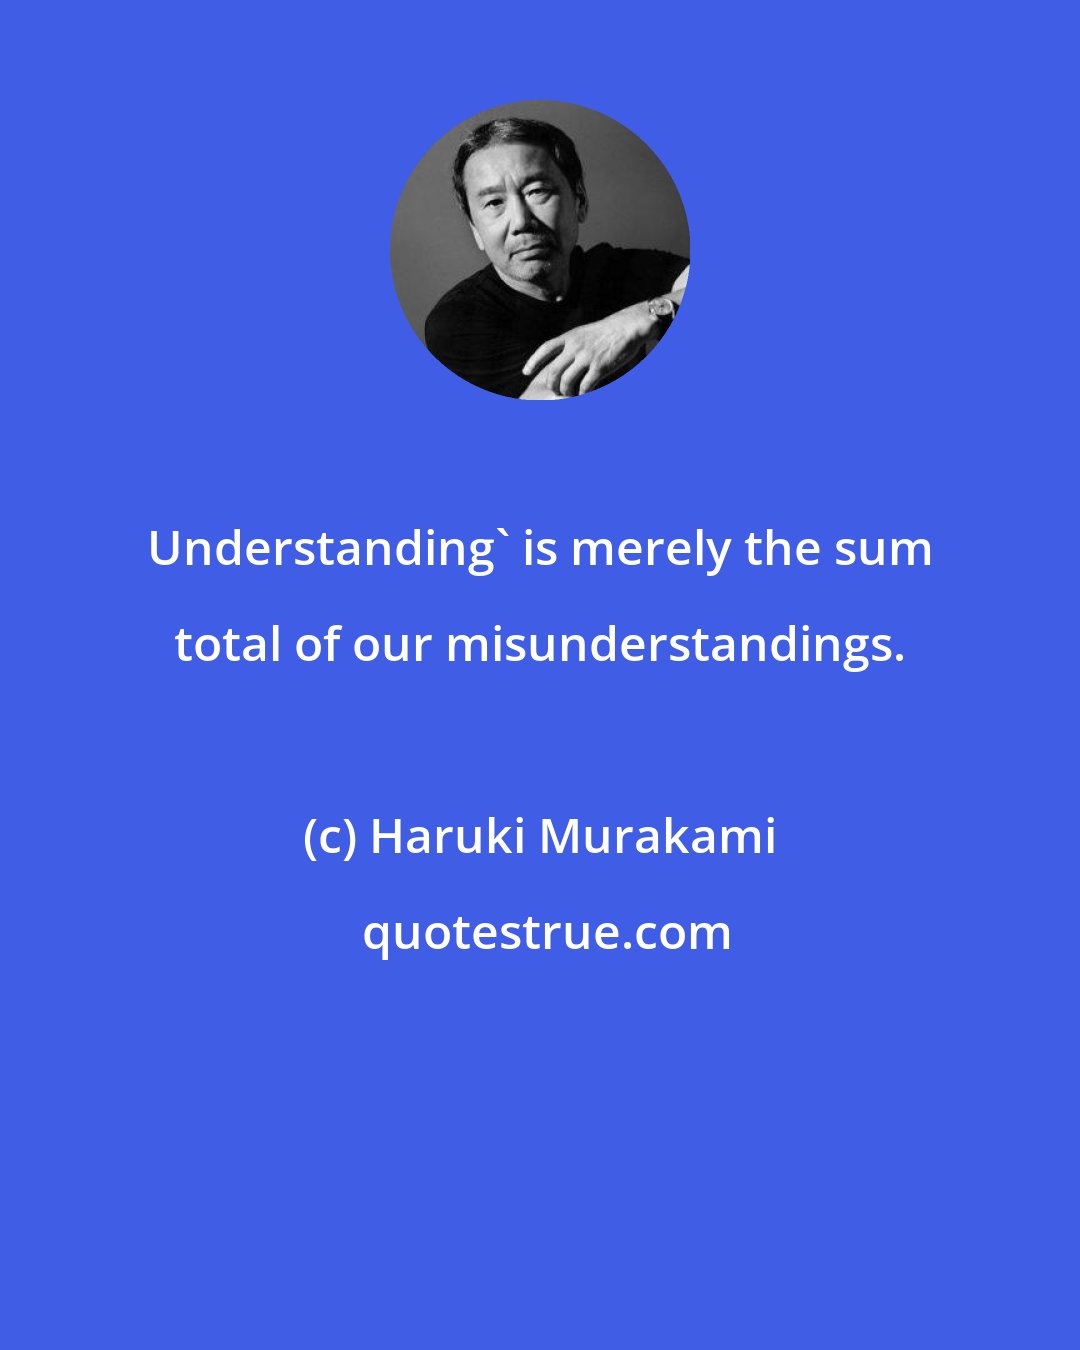 Haruki Murakami: Understanding' is merely the sum total of our misunderstandings.